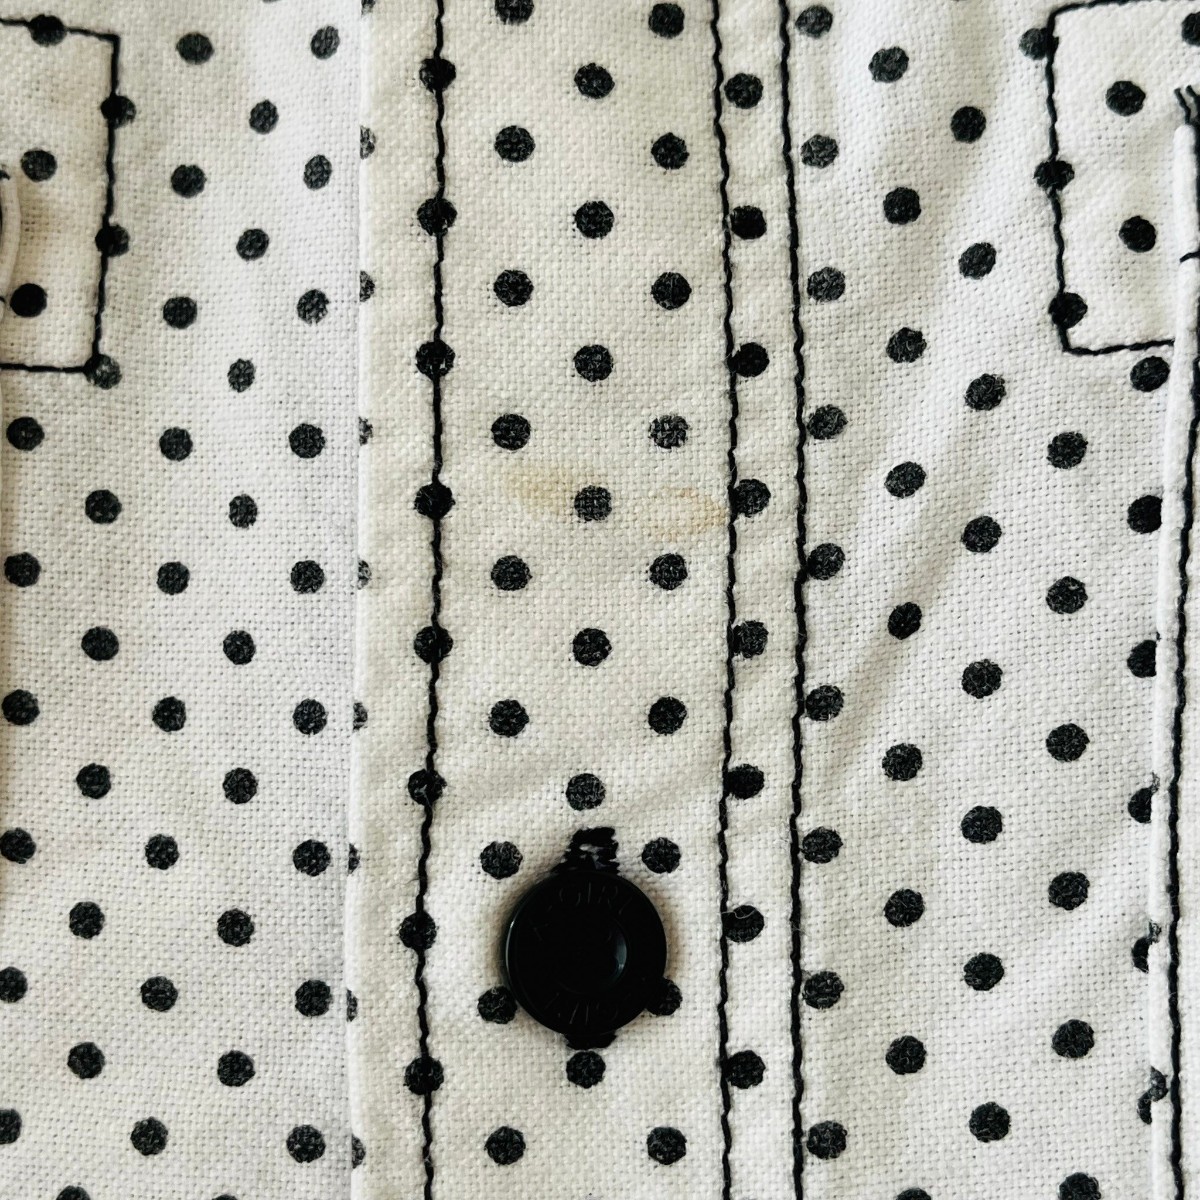 F8832cL X-girl X-girl size 1 (S~M rank ) long sleeve shirt white × black polka dot pattern SHIRT lady's cotton 100% Street 